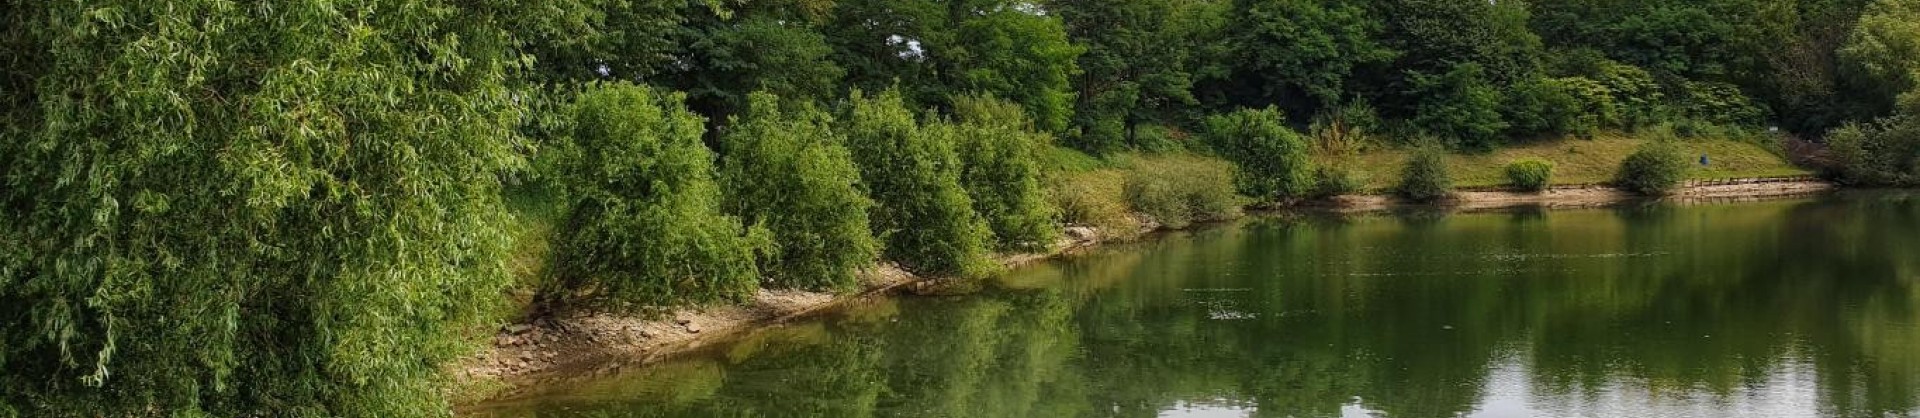 Maribor ribniki ostriz moja jezera manca korelc 5 sl